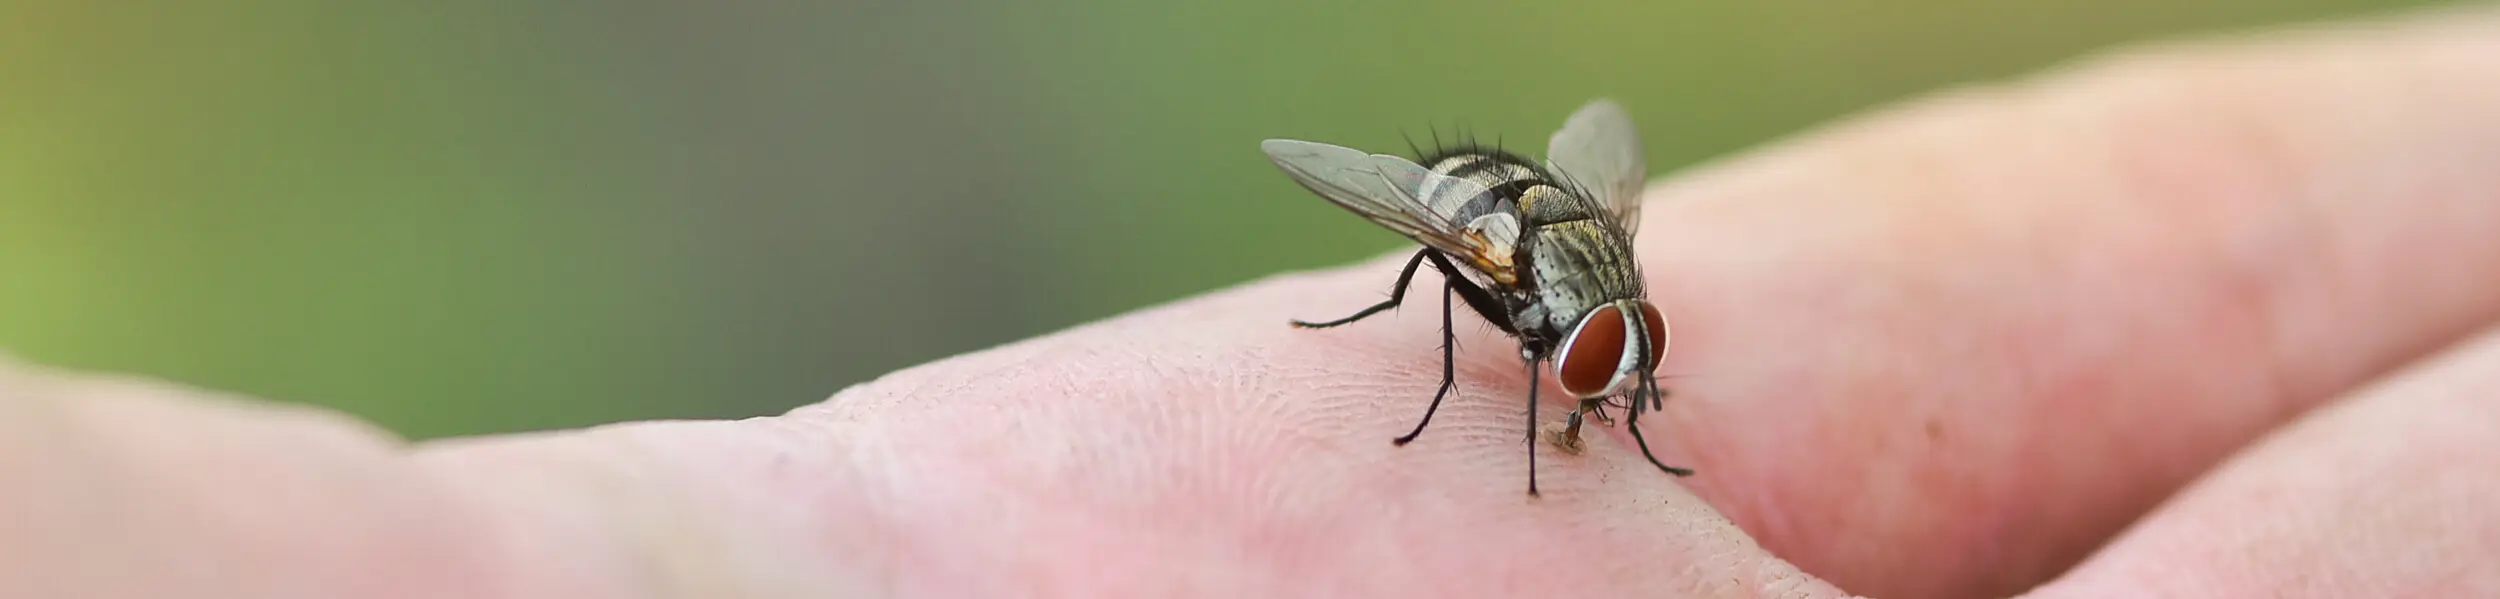 Closeup of a fly on a hand - Ja-Roy Pest Control serving Baton Rouge & Covington